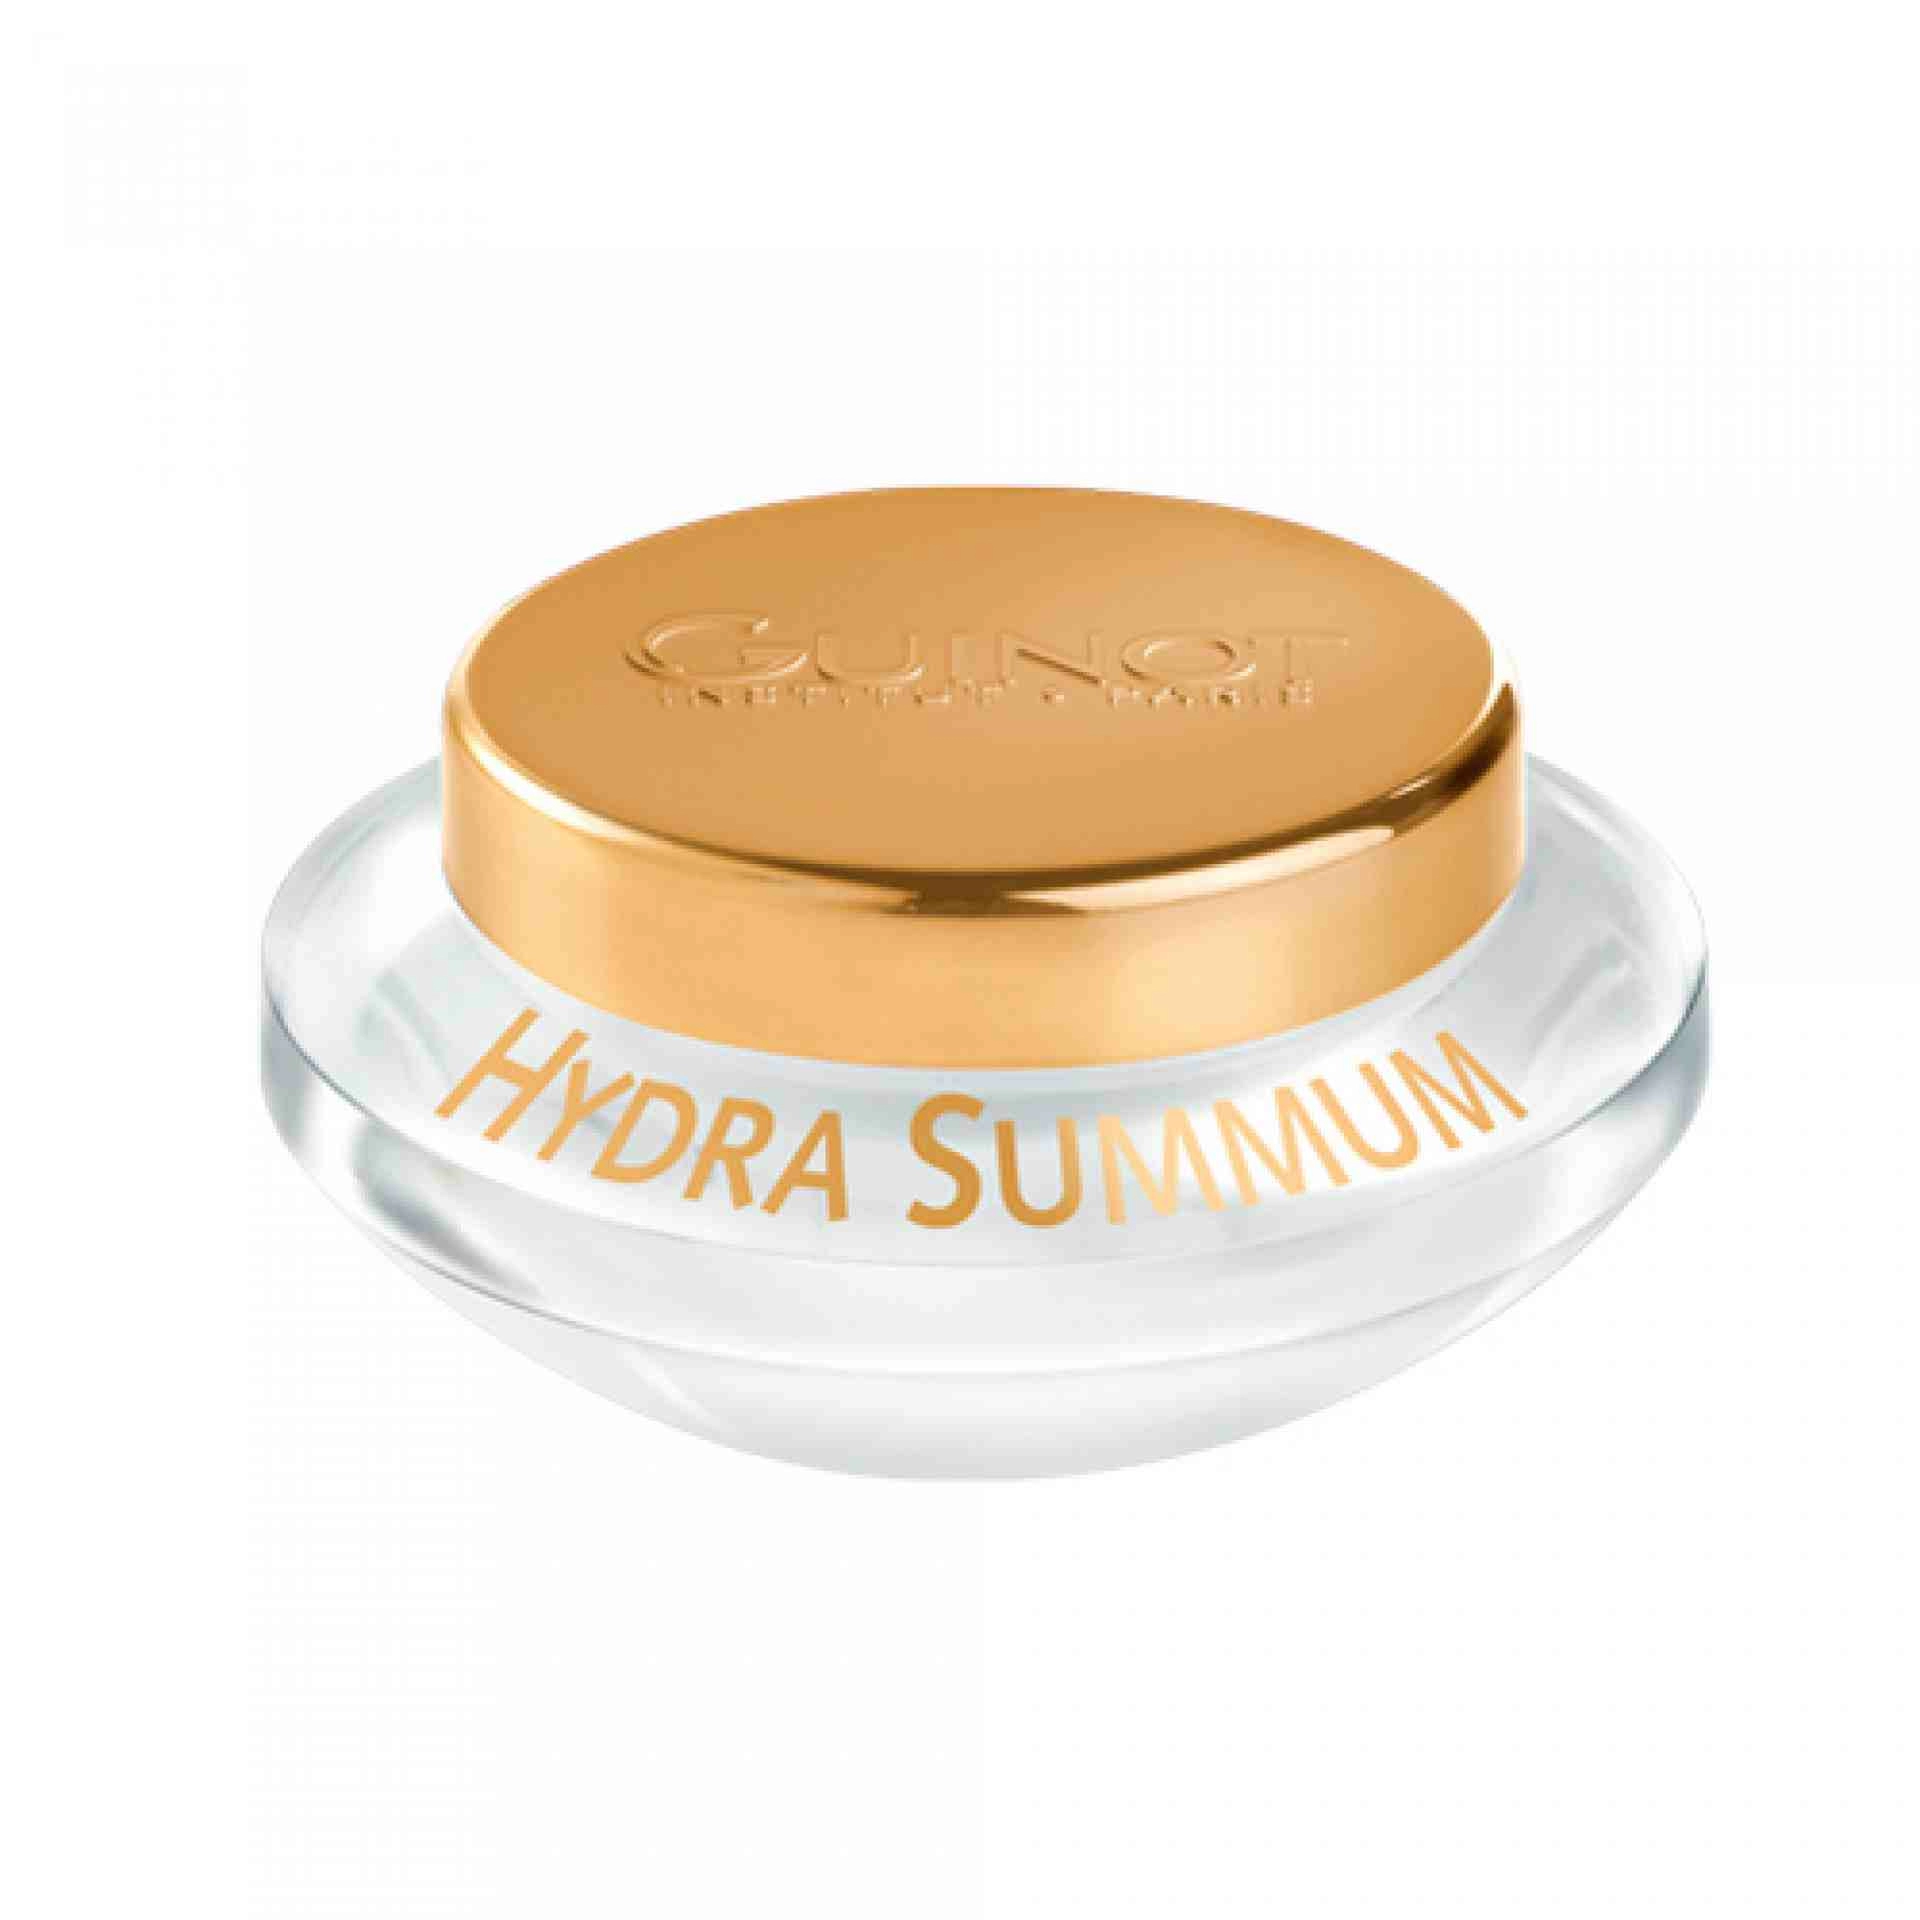 Crème Hydra Summum | Crema Hidratante 50ml - Guinot ®